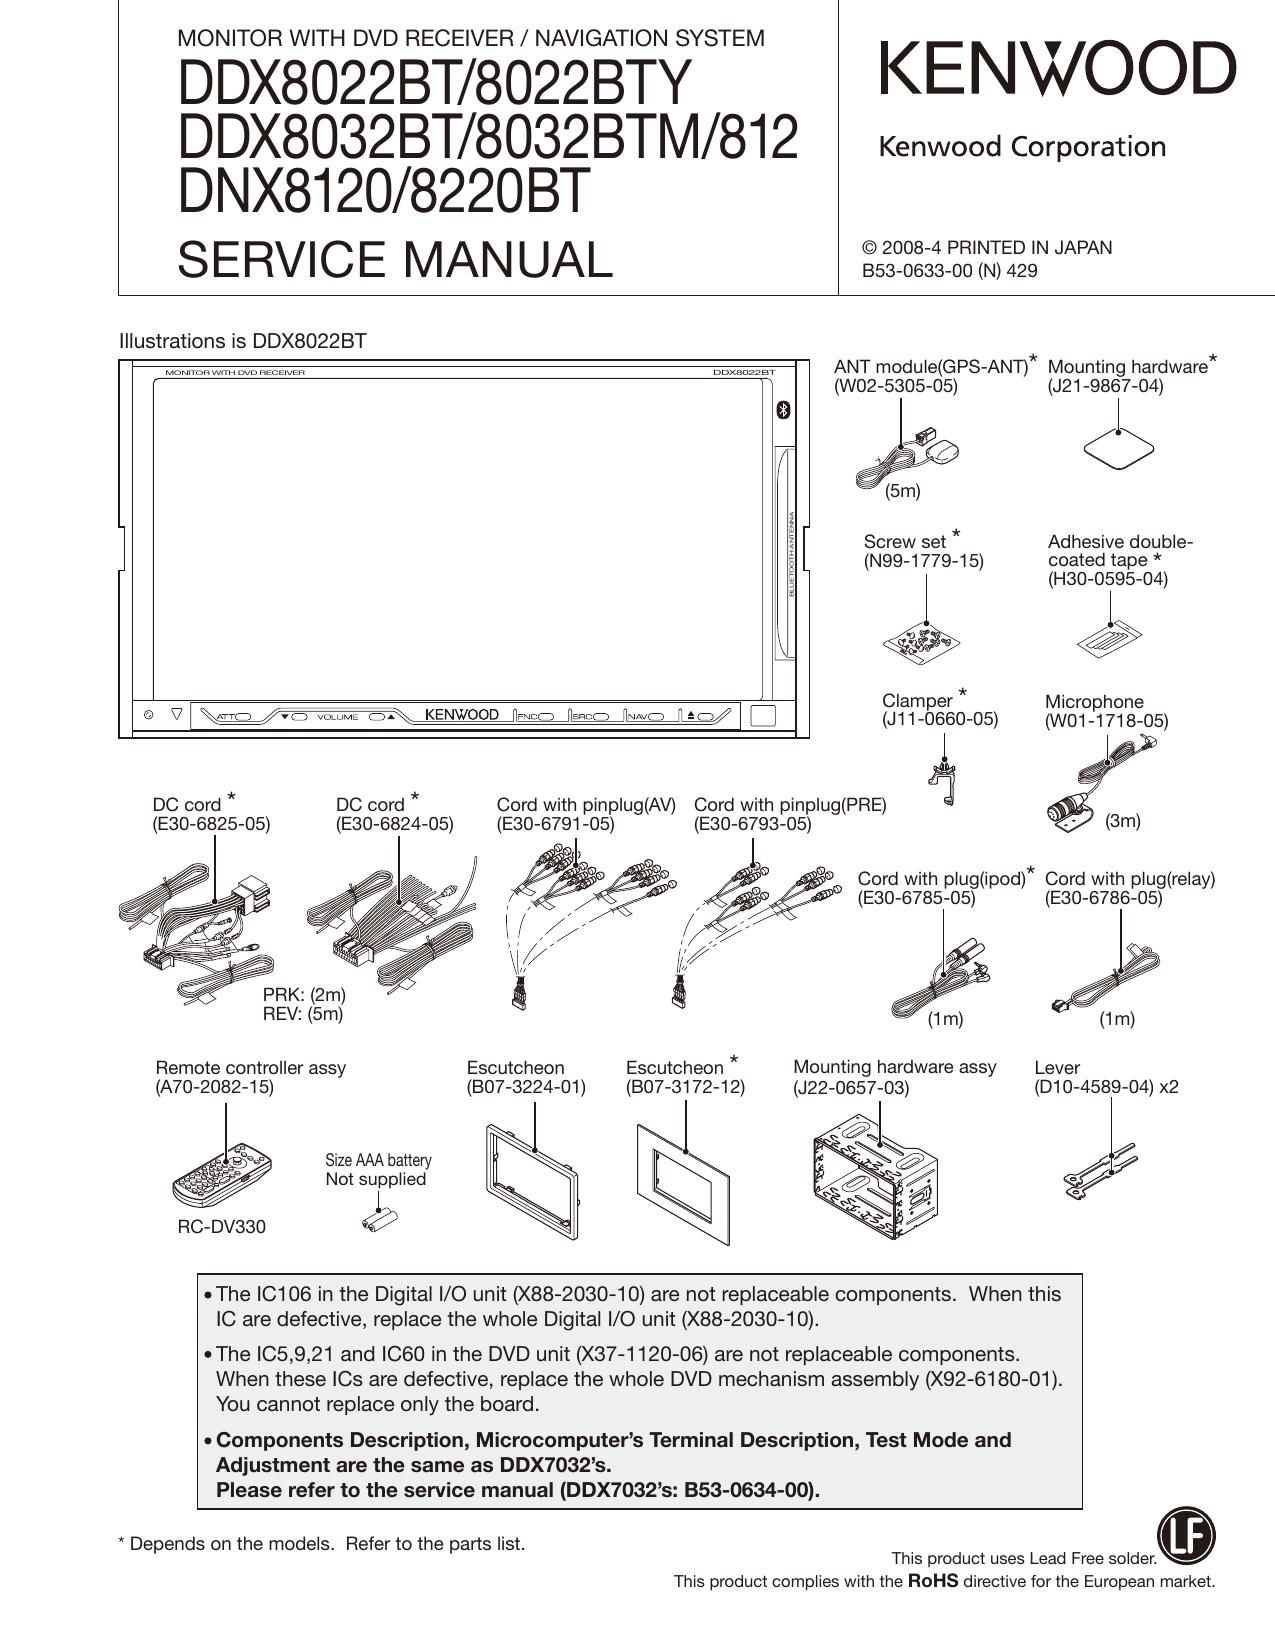 Kenwood DNX 8220 BT Service Manual